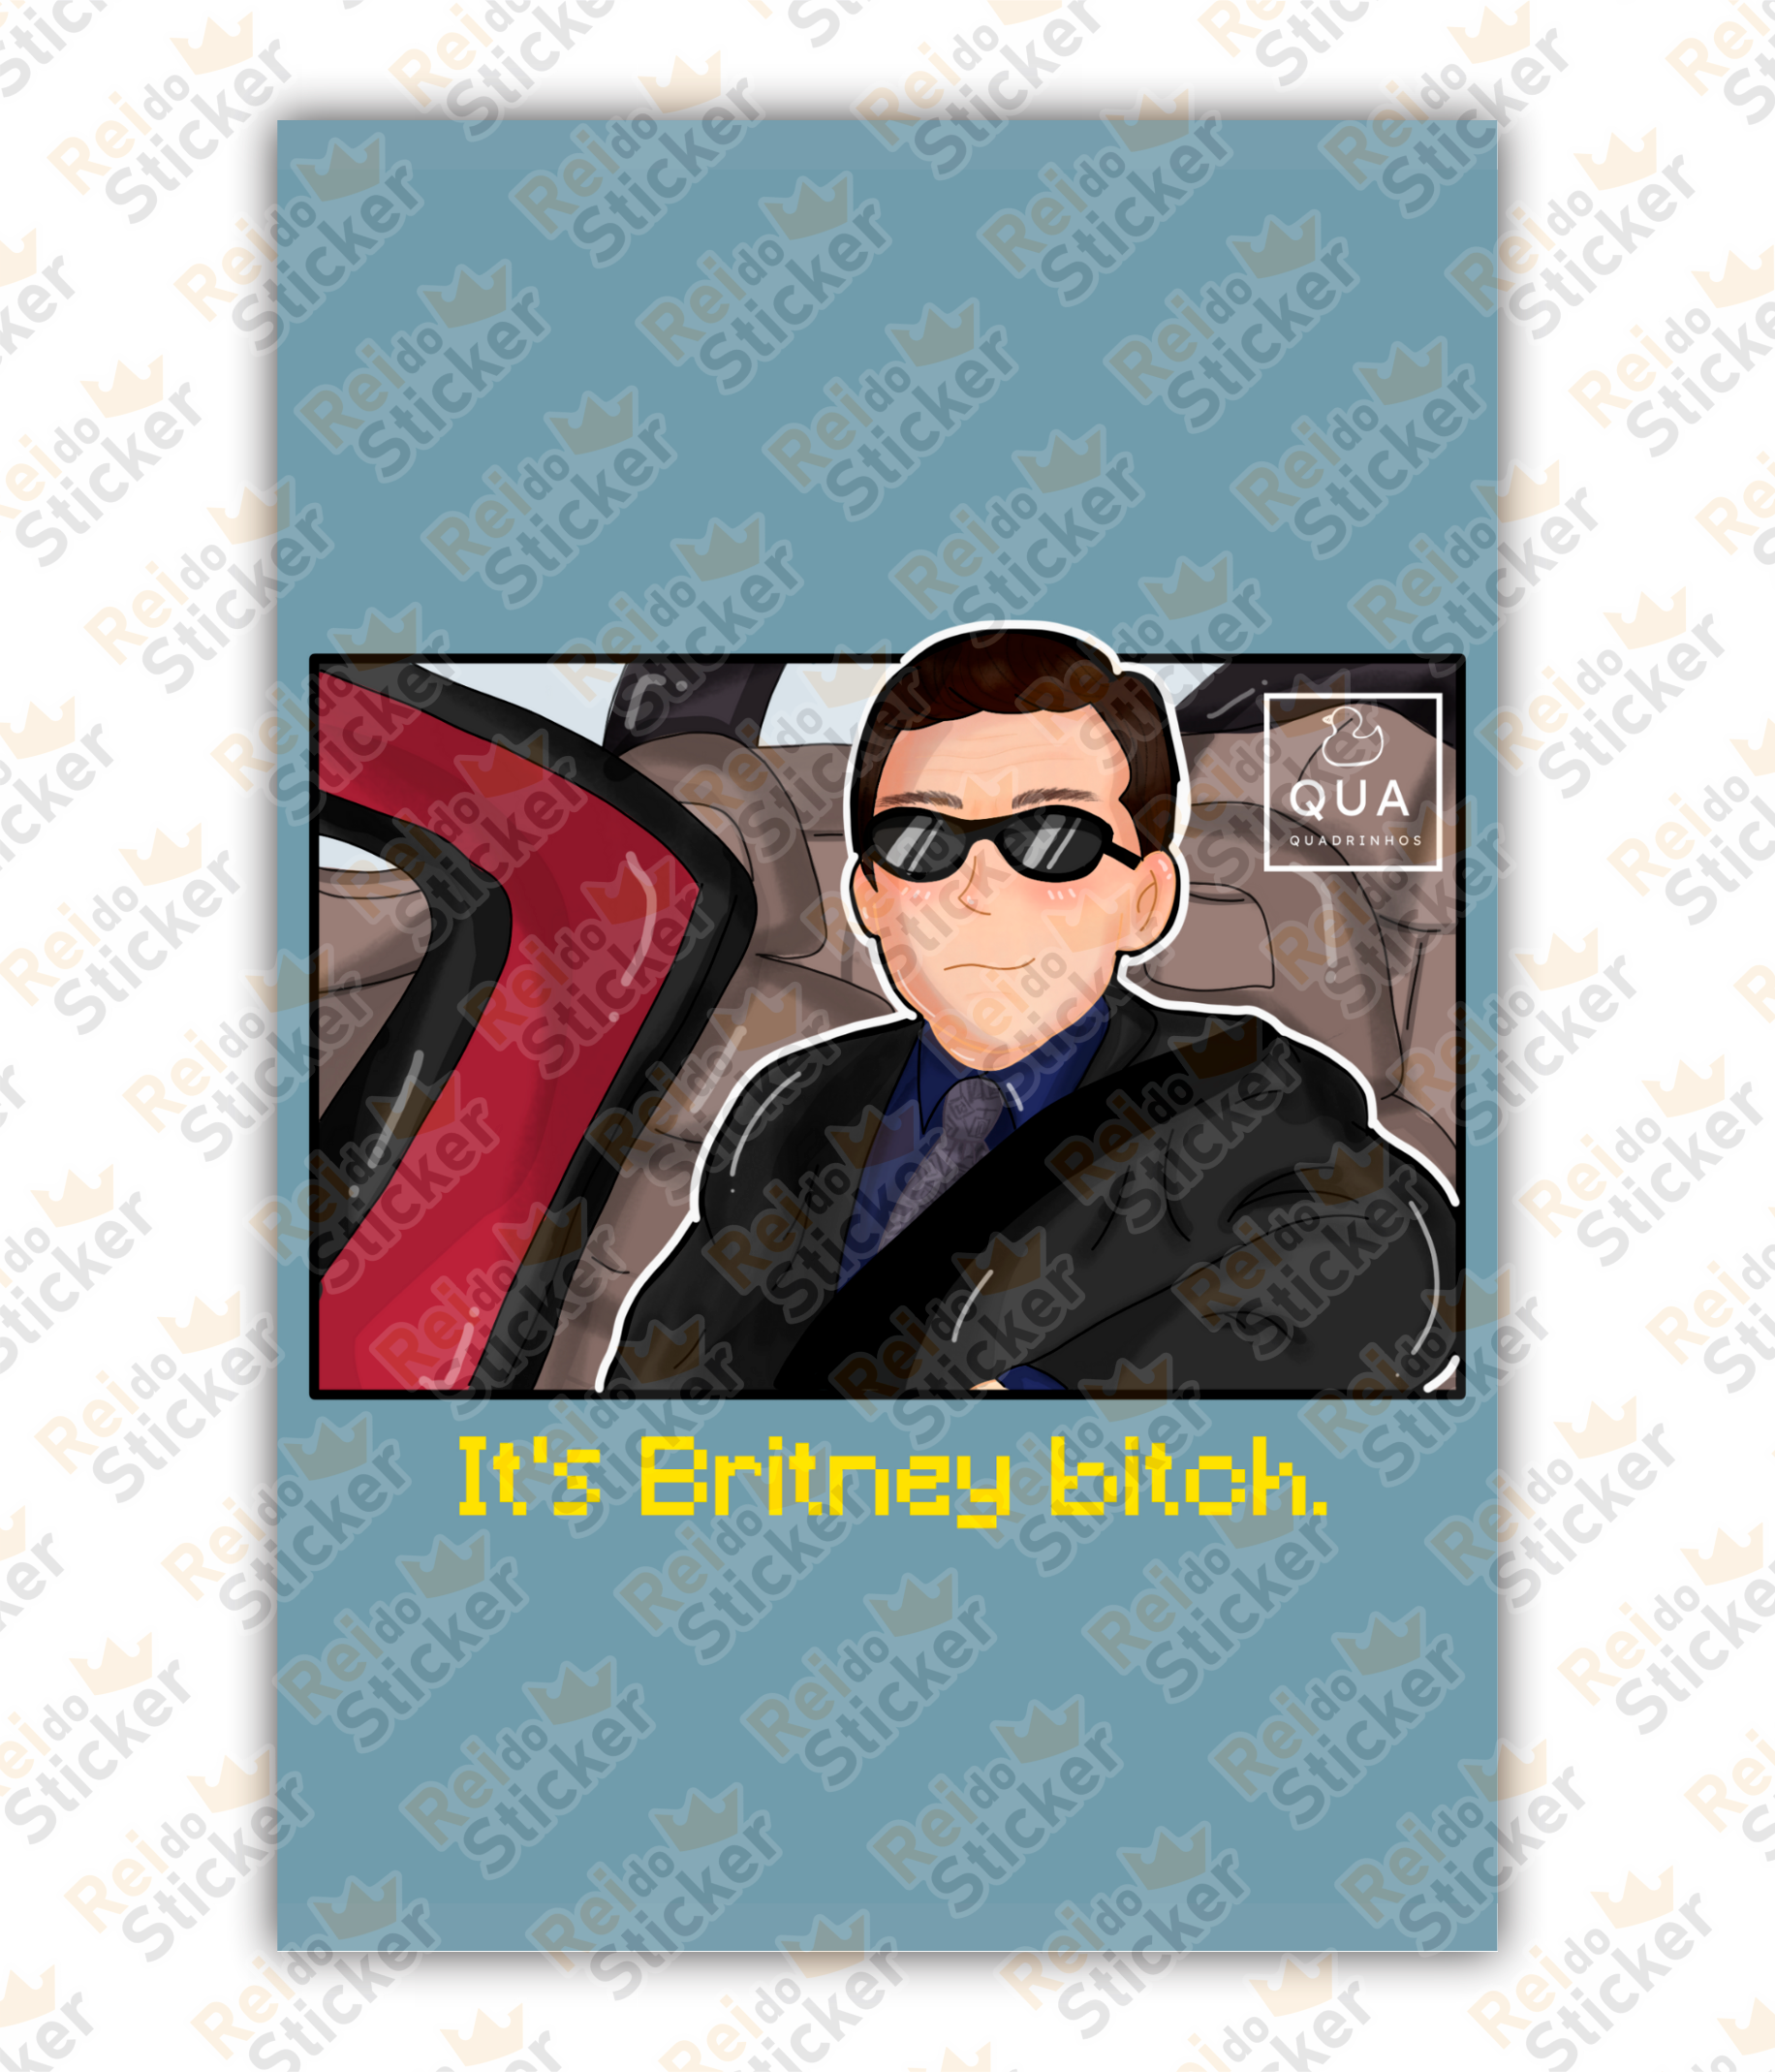 Michael Scott - It's Britney b!tch